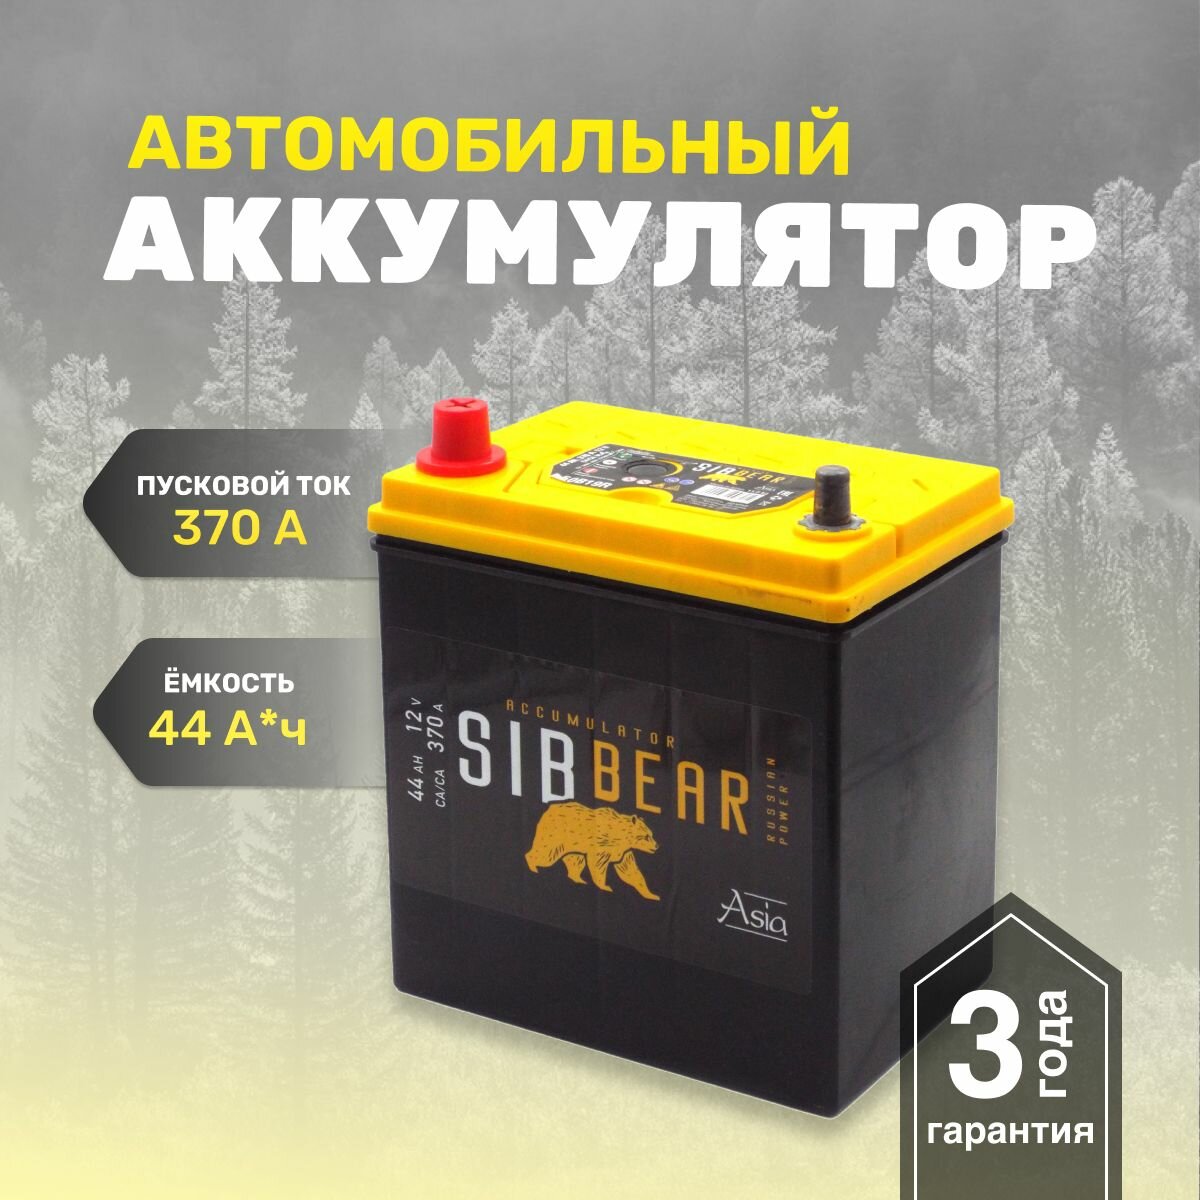 Аккумулятор автомобильный SIBBEAR ASIA 50B19R 44 А*ч п. п 187х125х225 Прямая полярность.